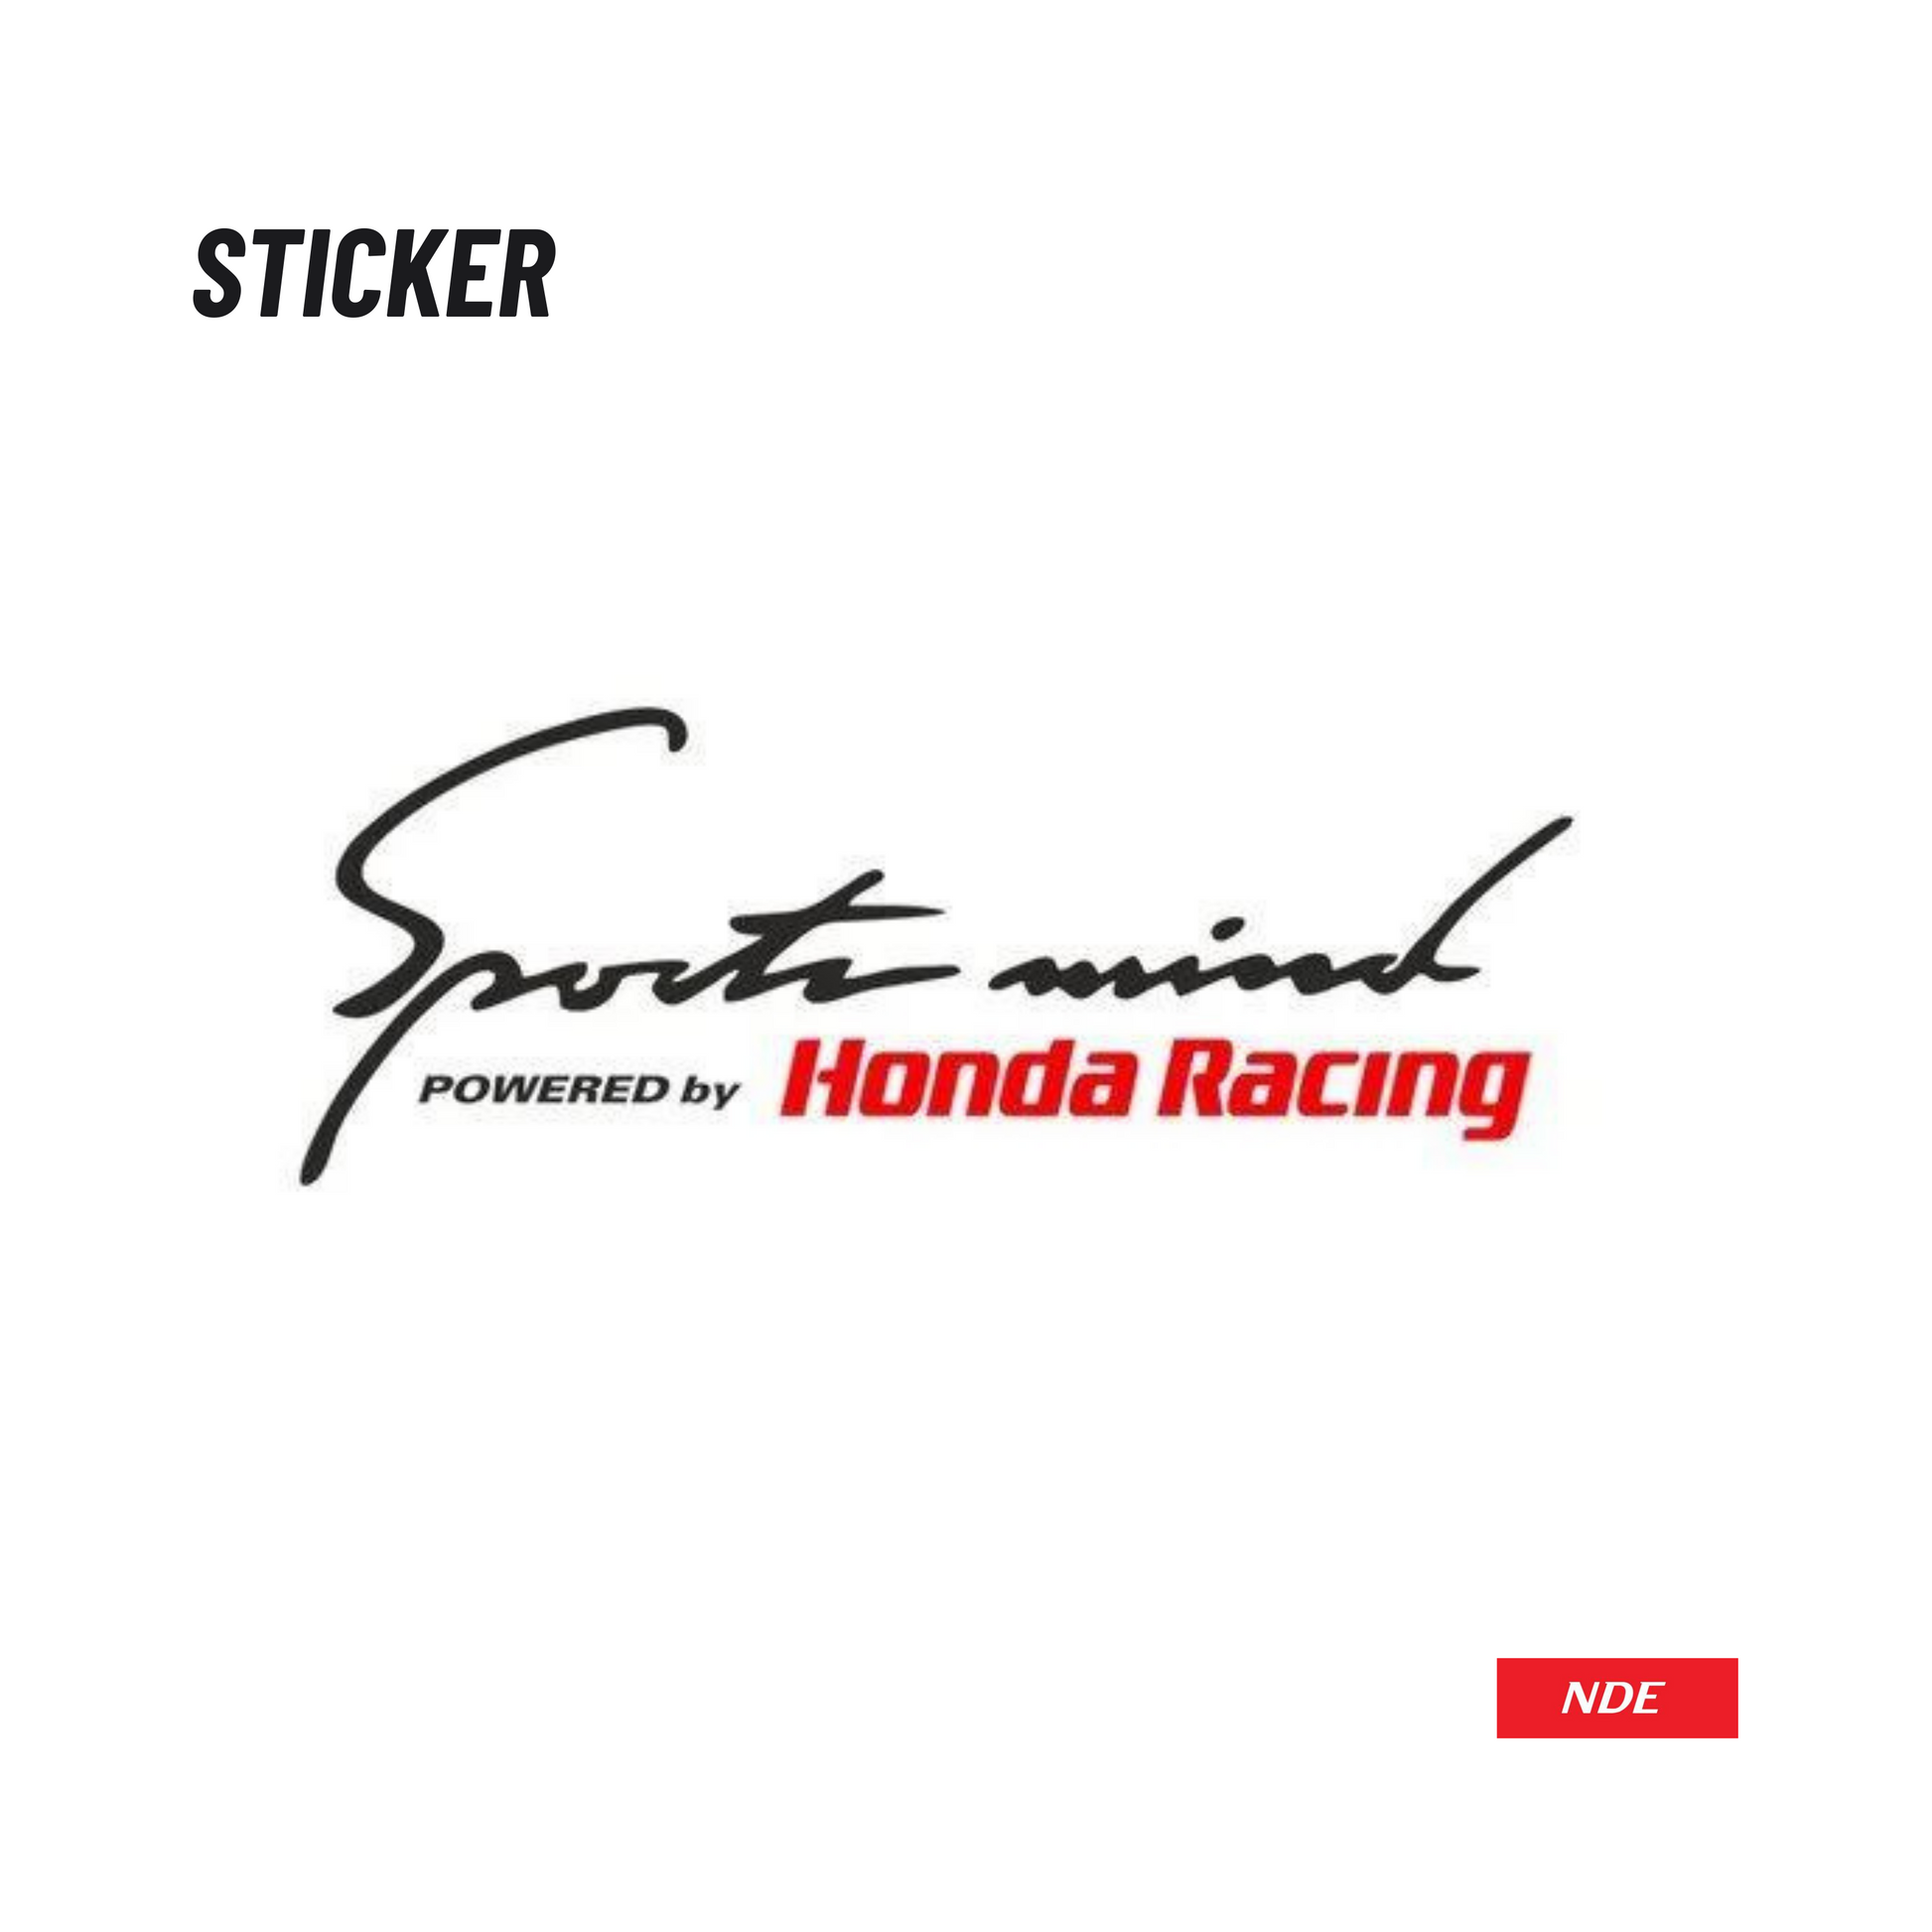 BUMPER STICKER SPORTS RACING TOYOTA HONDA SUZUKI KIA HYUNDAI PAKISTAN WWW.NDESTORE.COM SPORTS MIND 